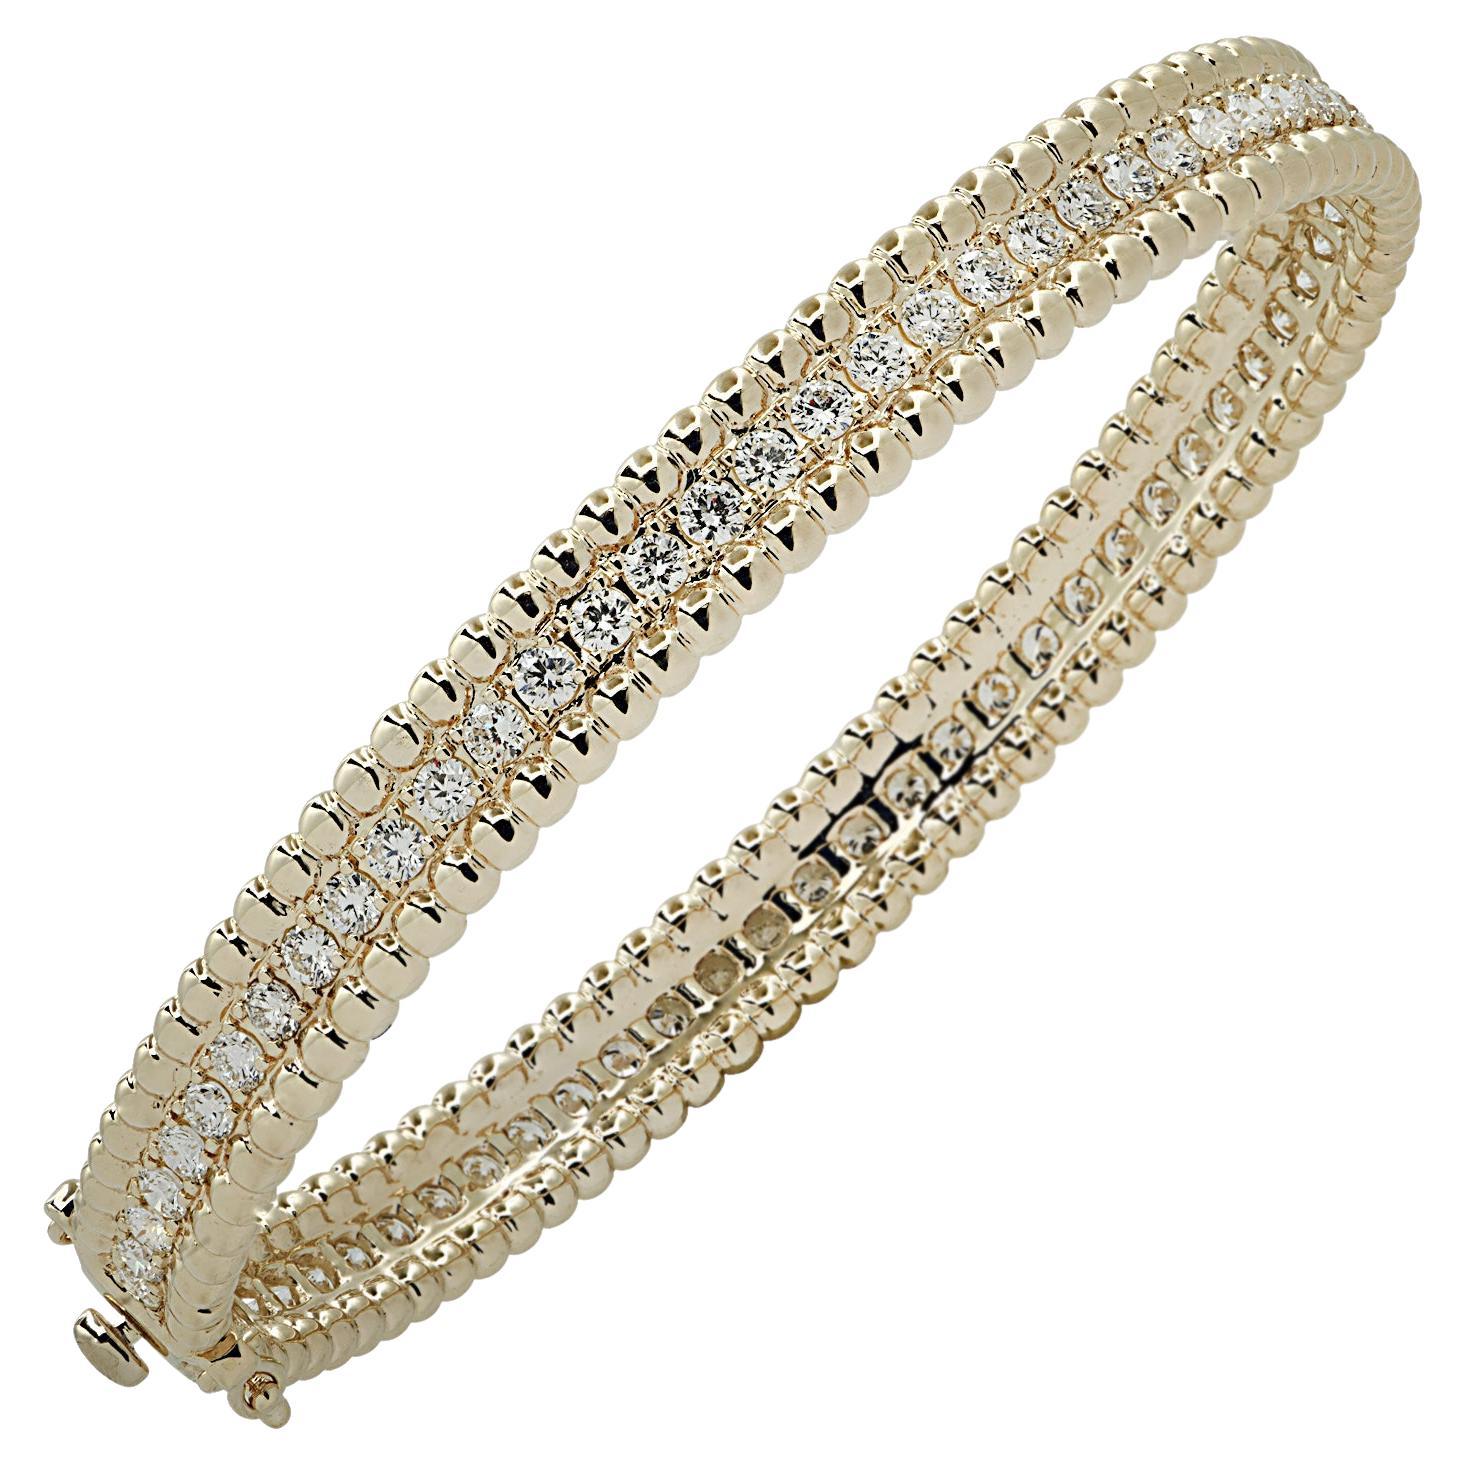 Vivid Diamonds 2.75 Carat Diamond Bangle Bracelet